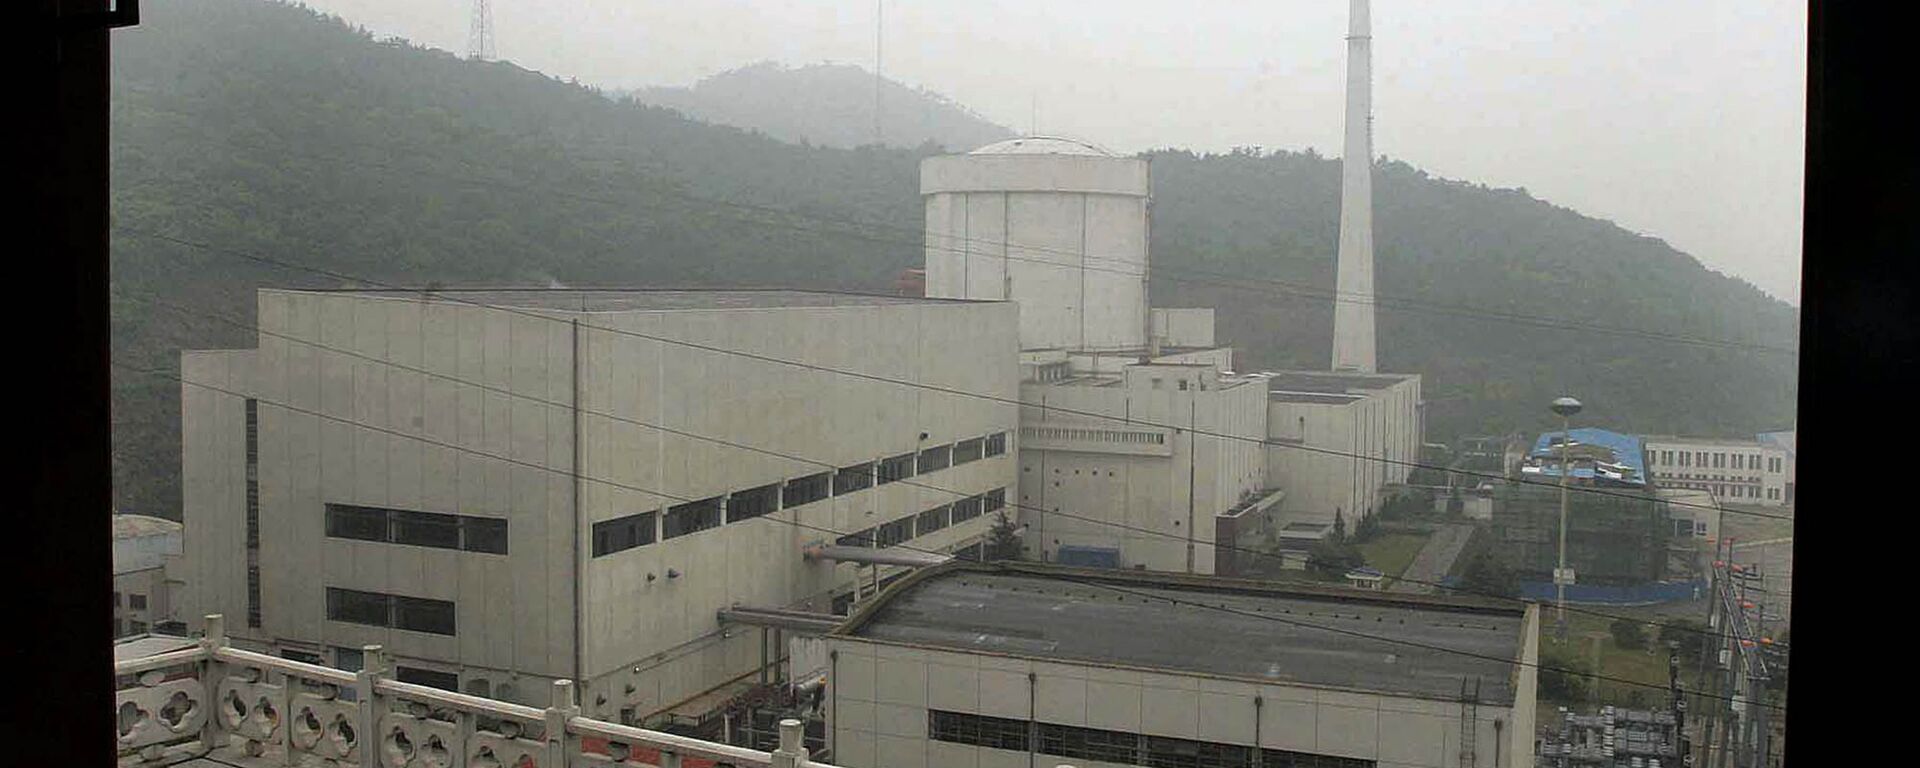 Nuclear power plant, Qinshan, China - 俄罗斯卫星通讯社, 1920, 14.09.2021